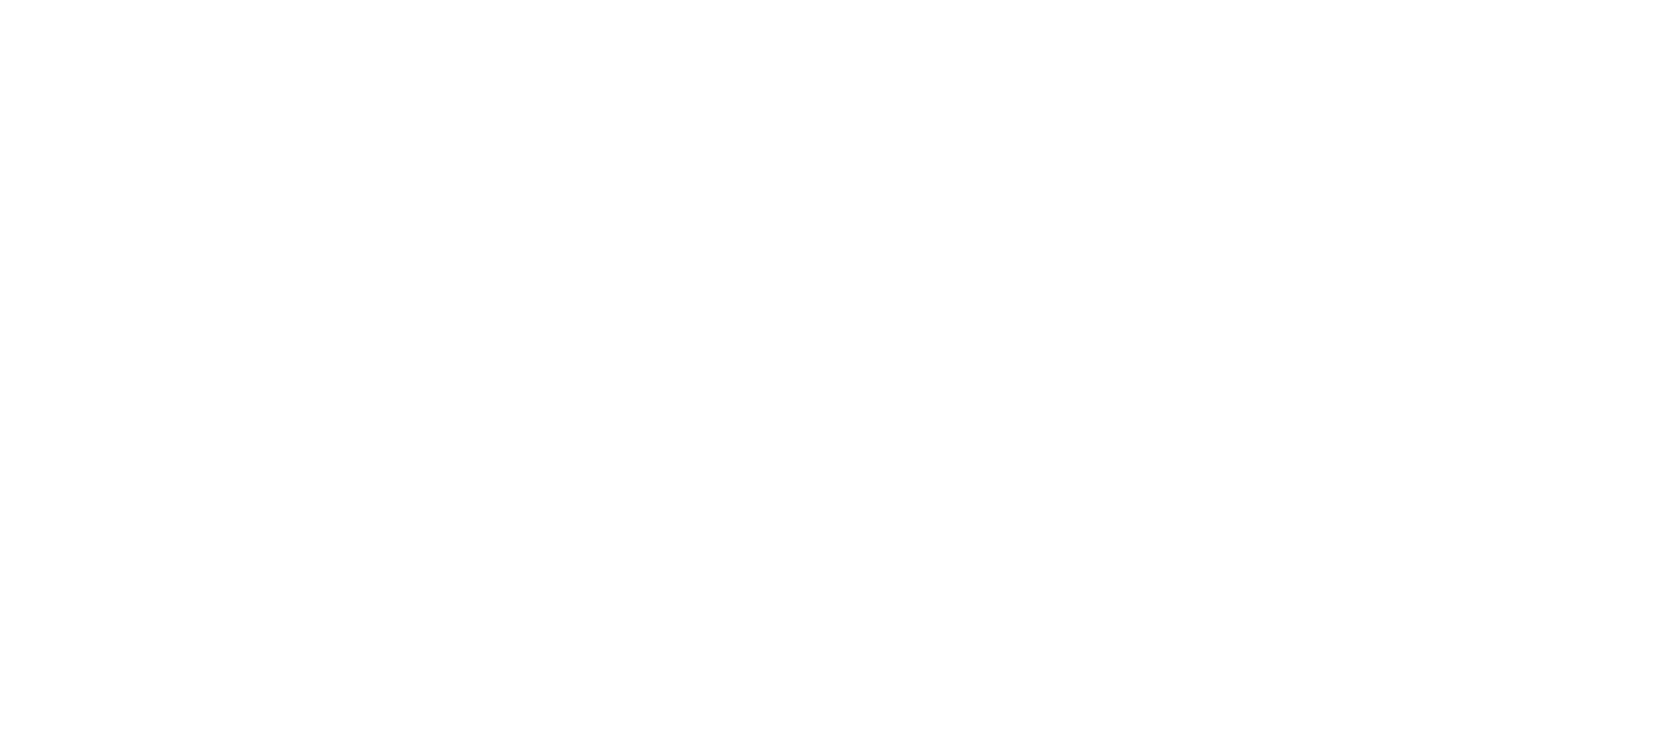 chaco33